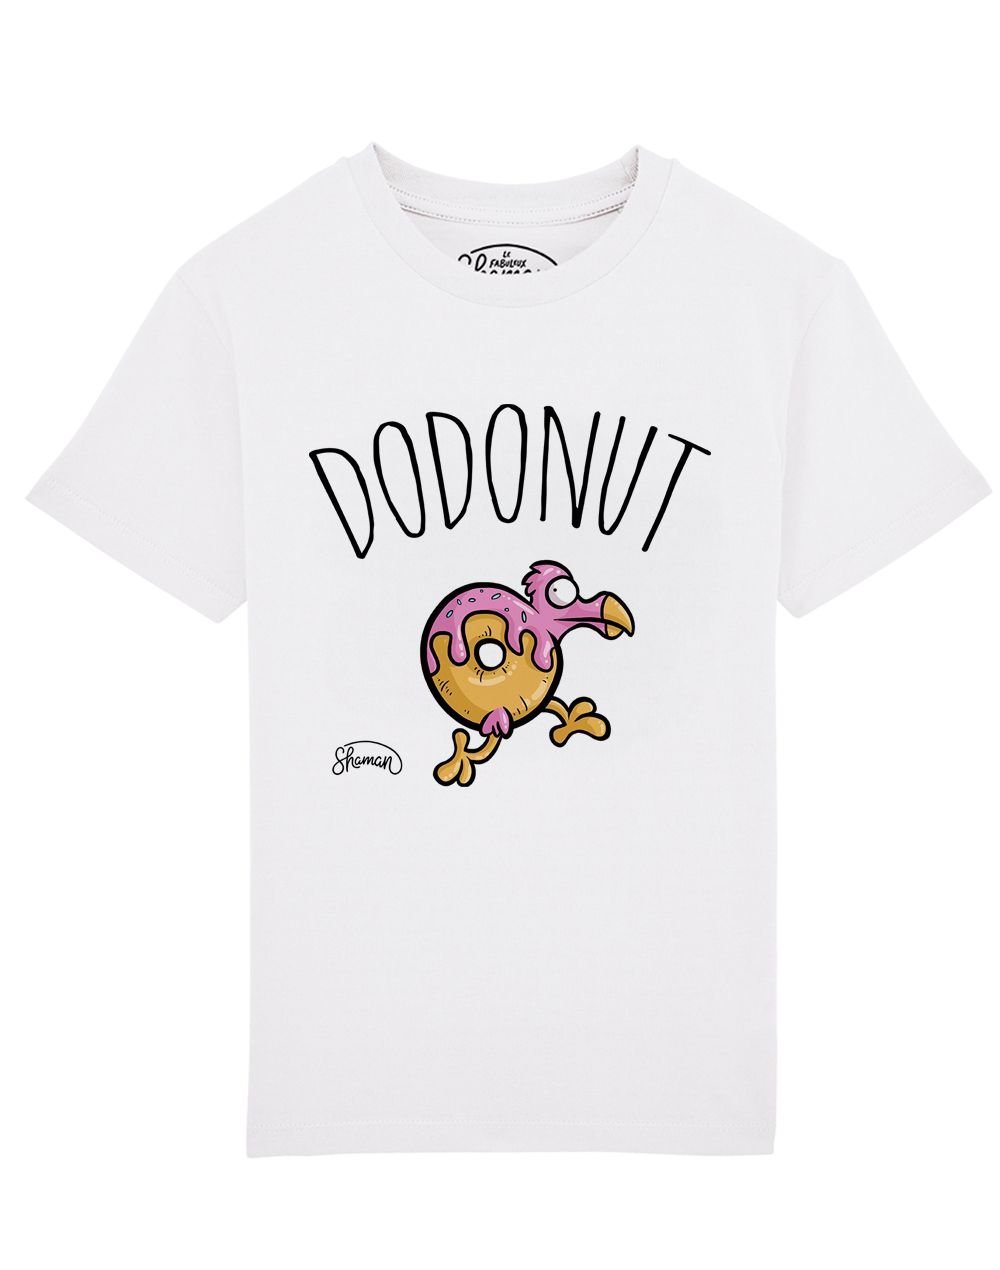 Tee shirt Dodonut